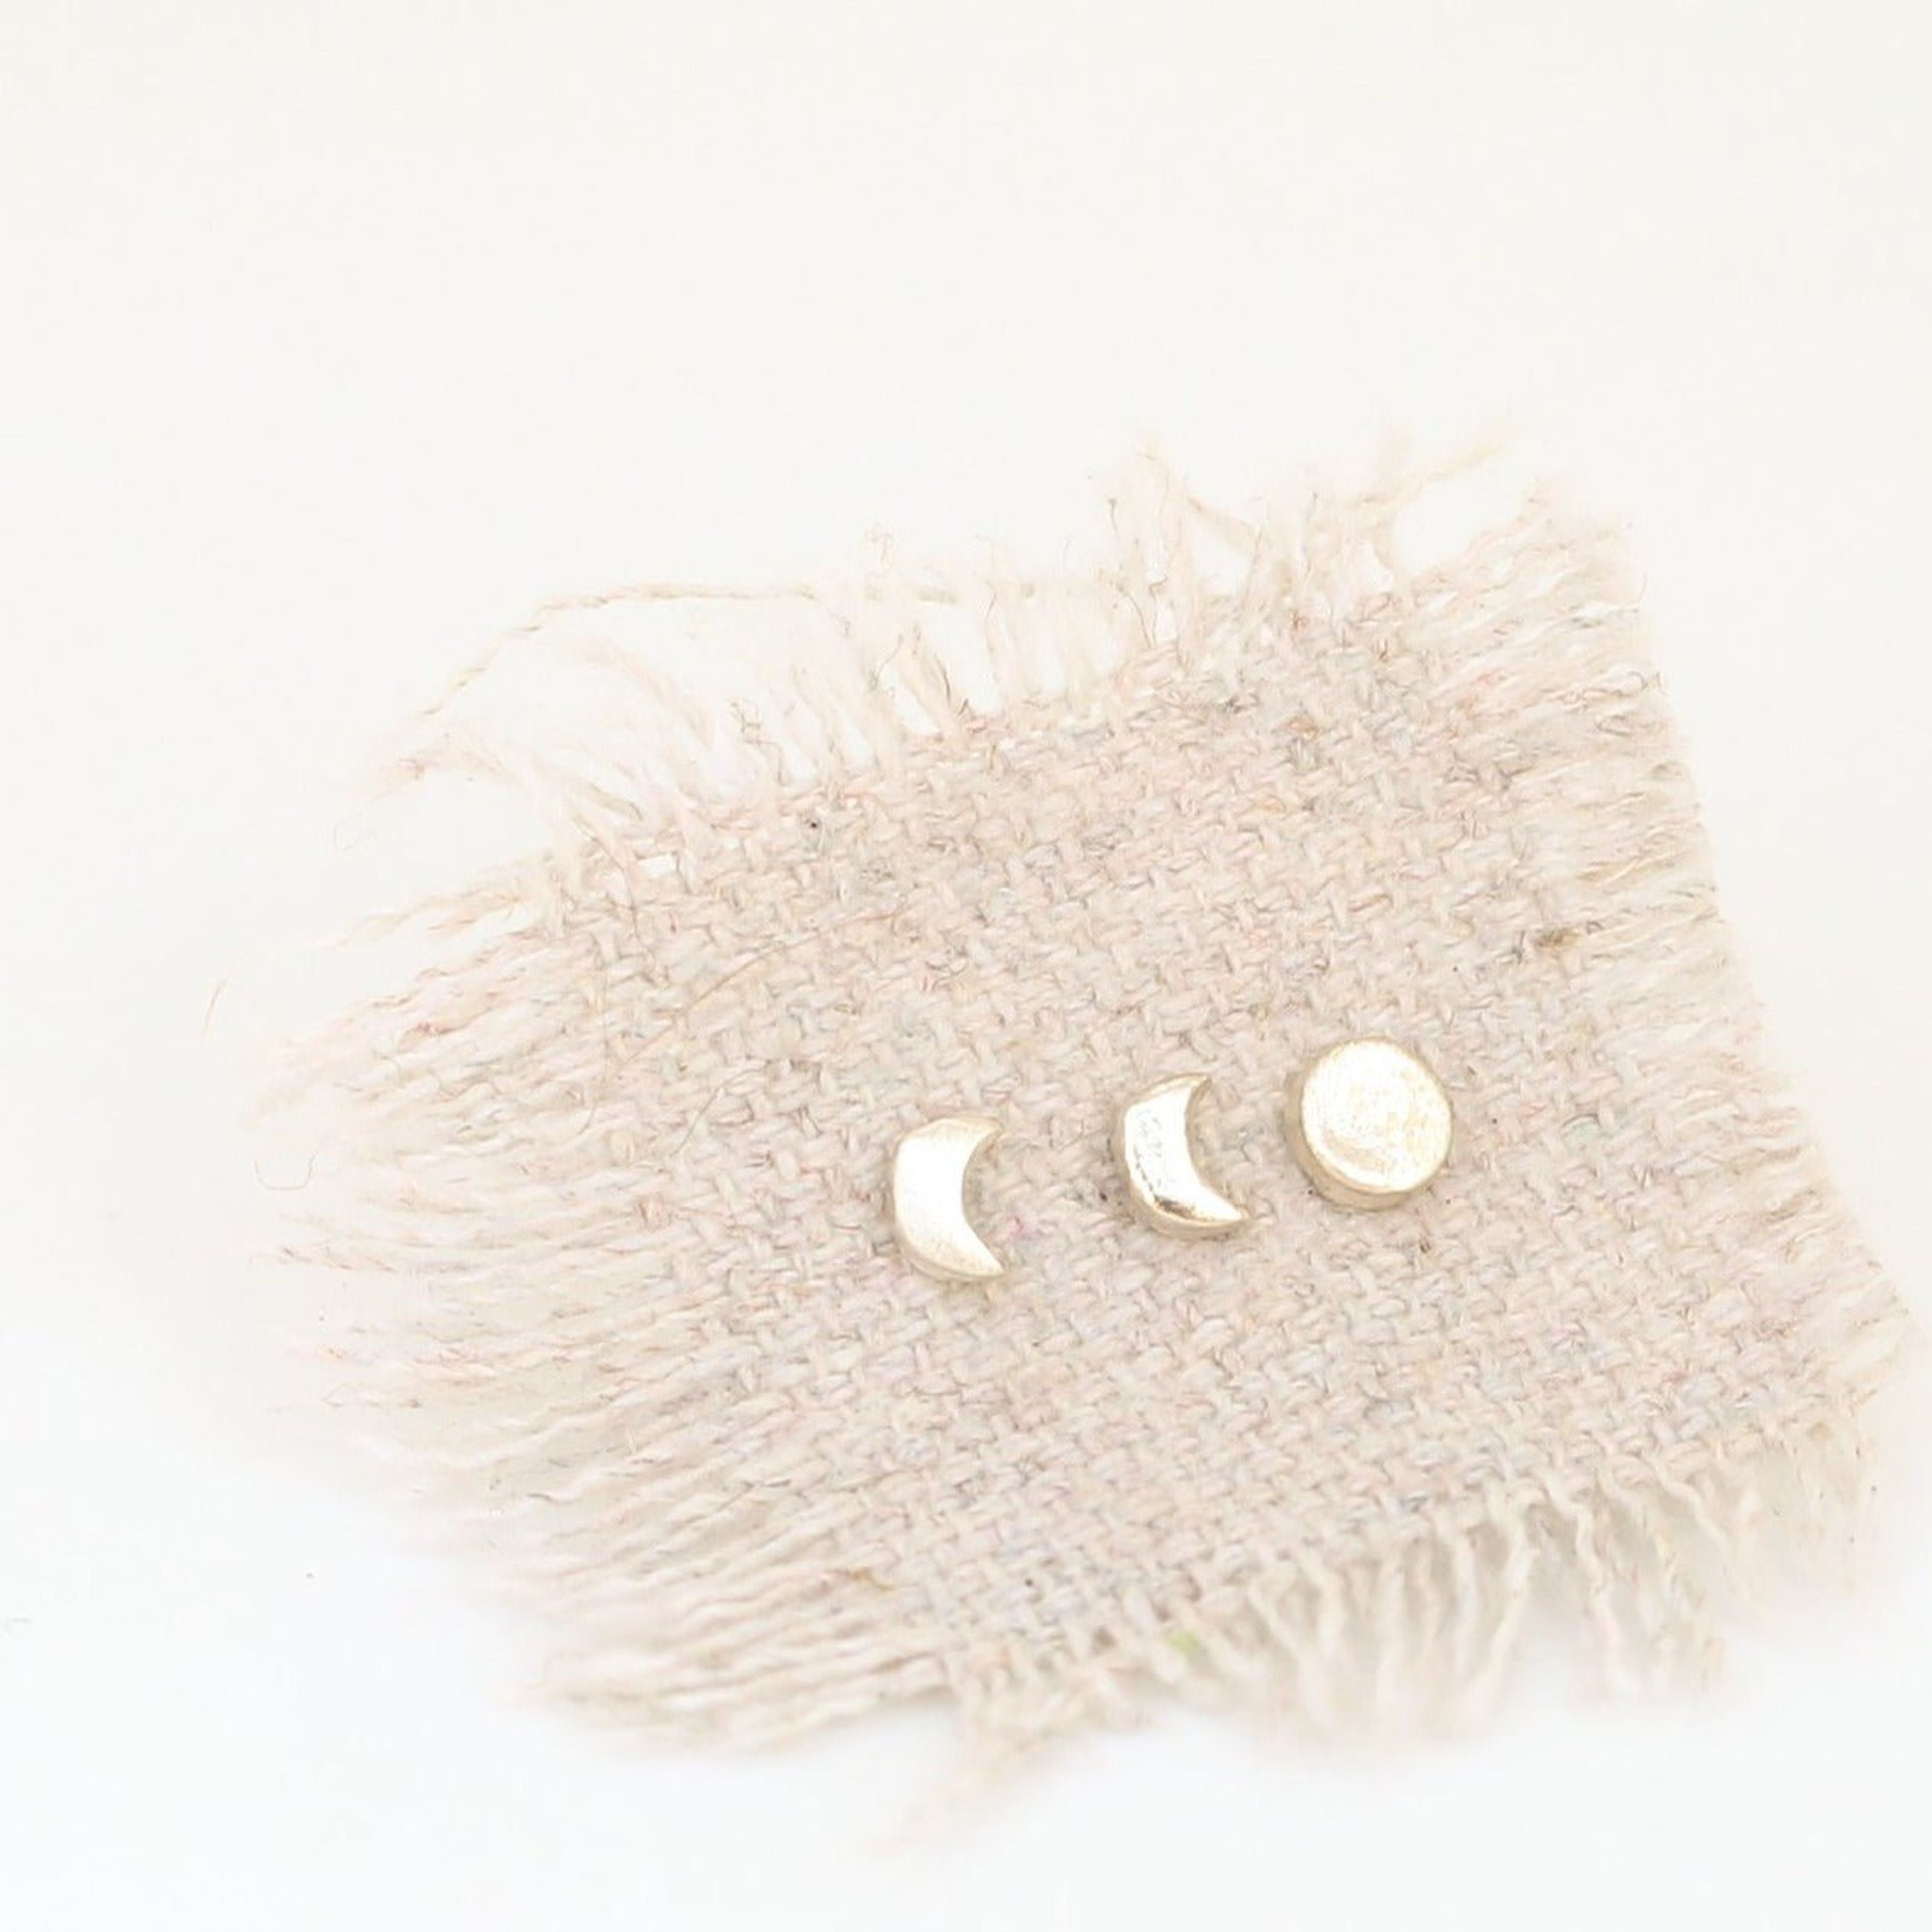 Moon Phase Trio - Full Moon, Crescent Moon Stud Earrings